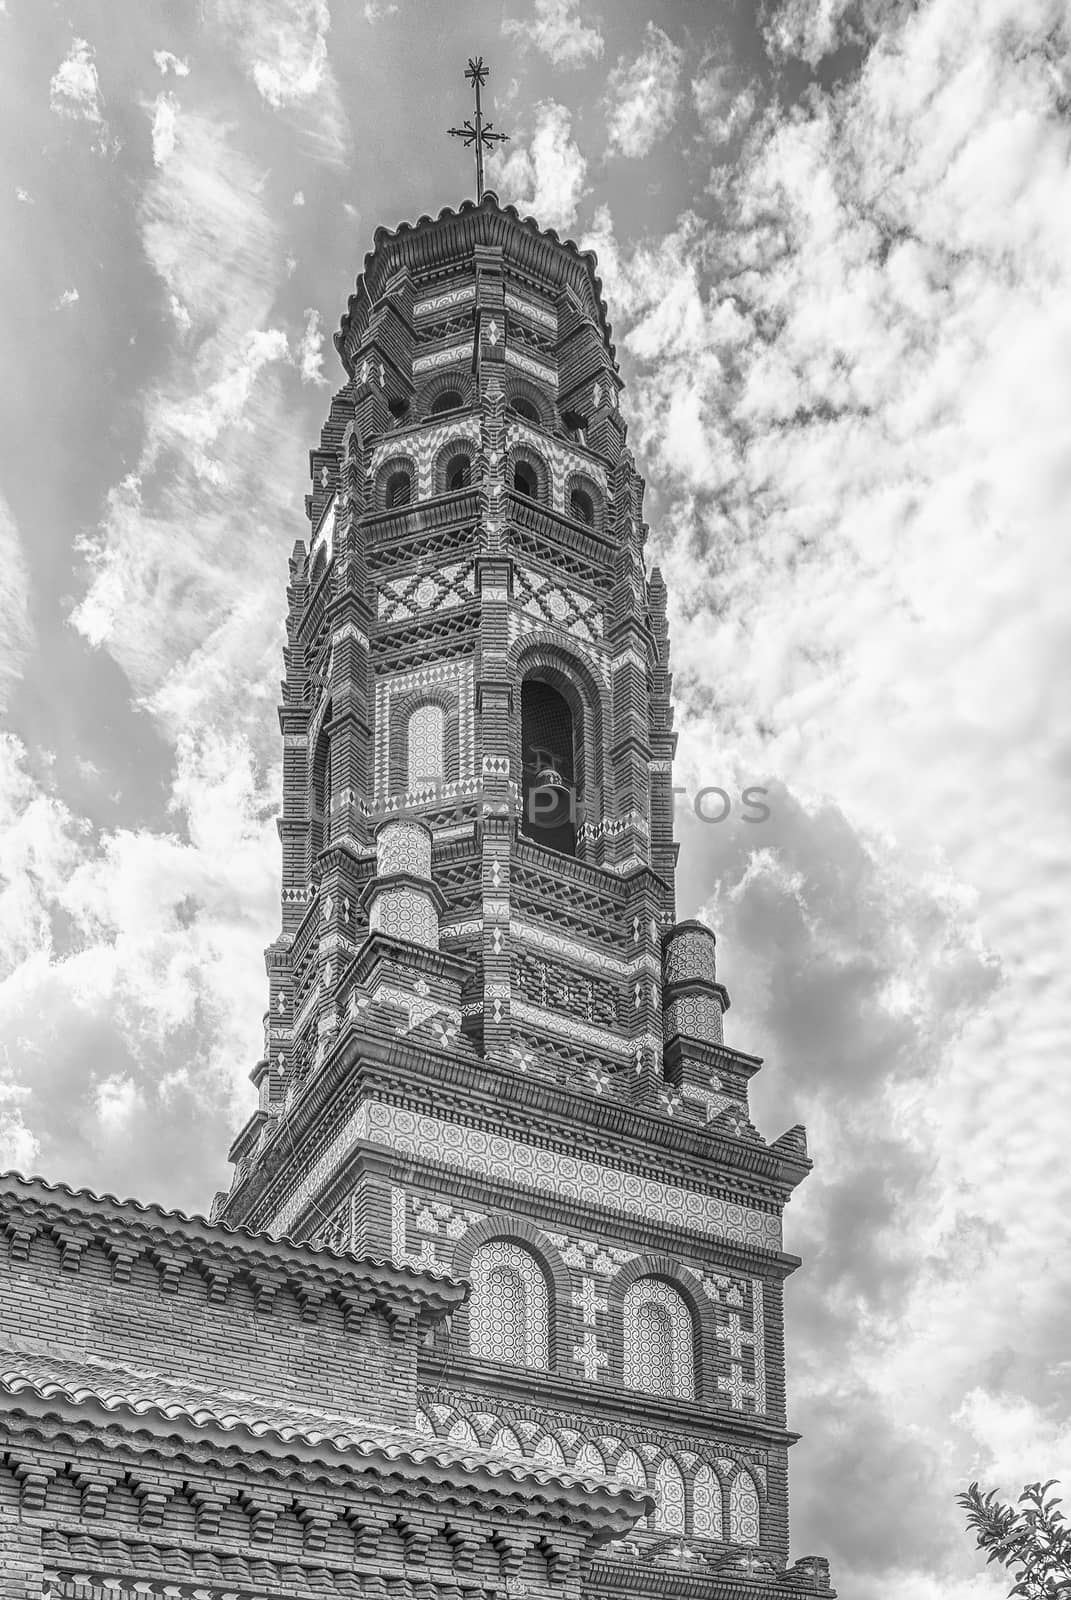 Scenic bell tower in Poble Espanyol, Barcelona, Catalonia, Spain by marcorubino